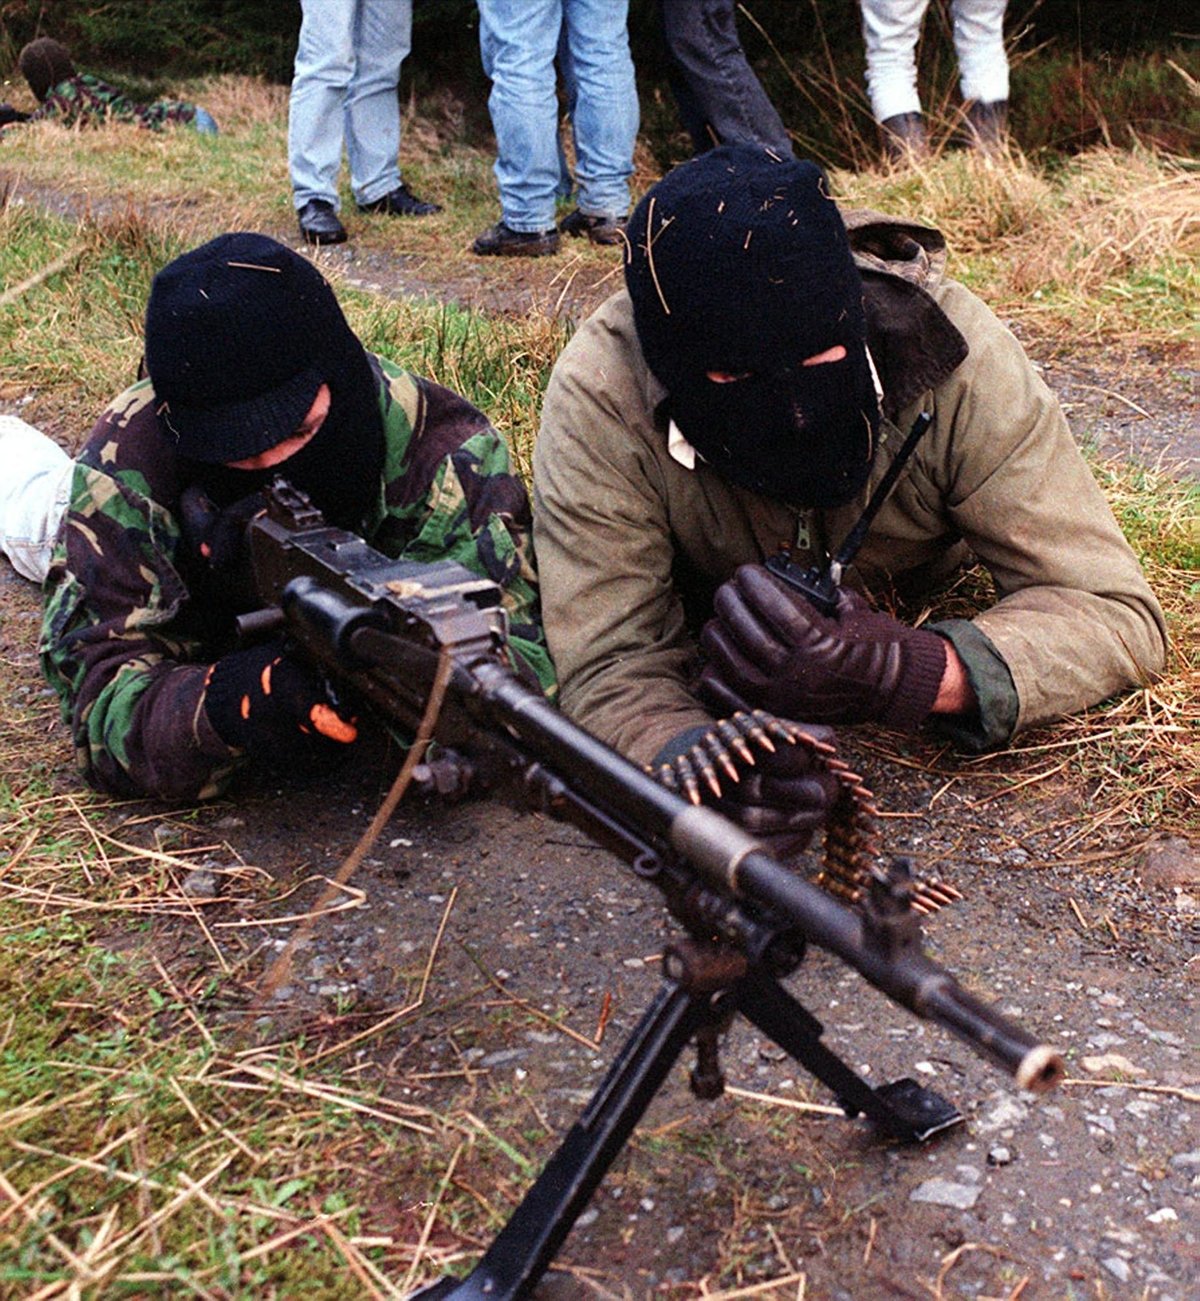 Northern Ireland terrorist victims face 'difficult year'